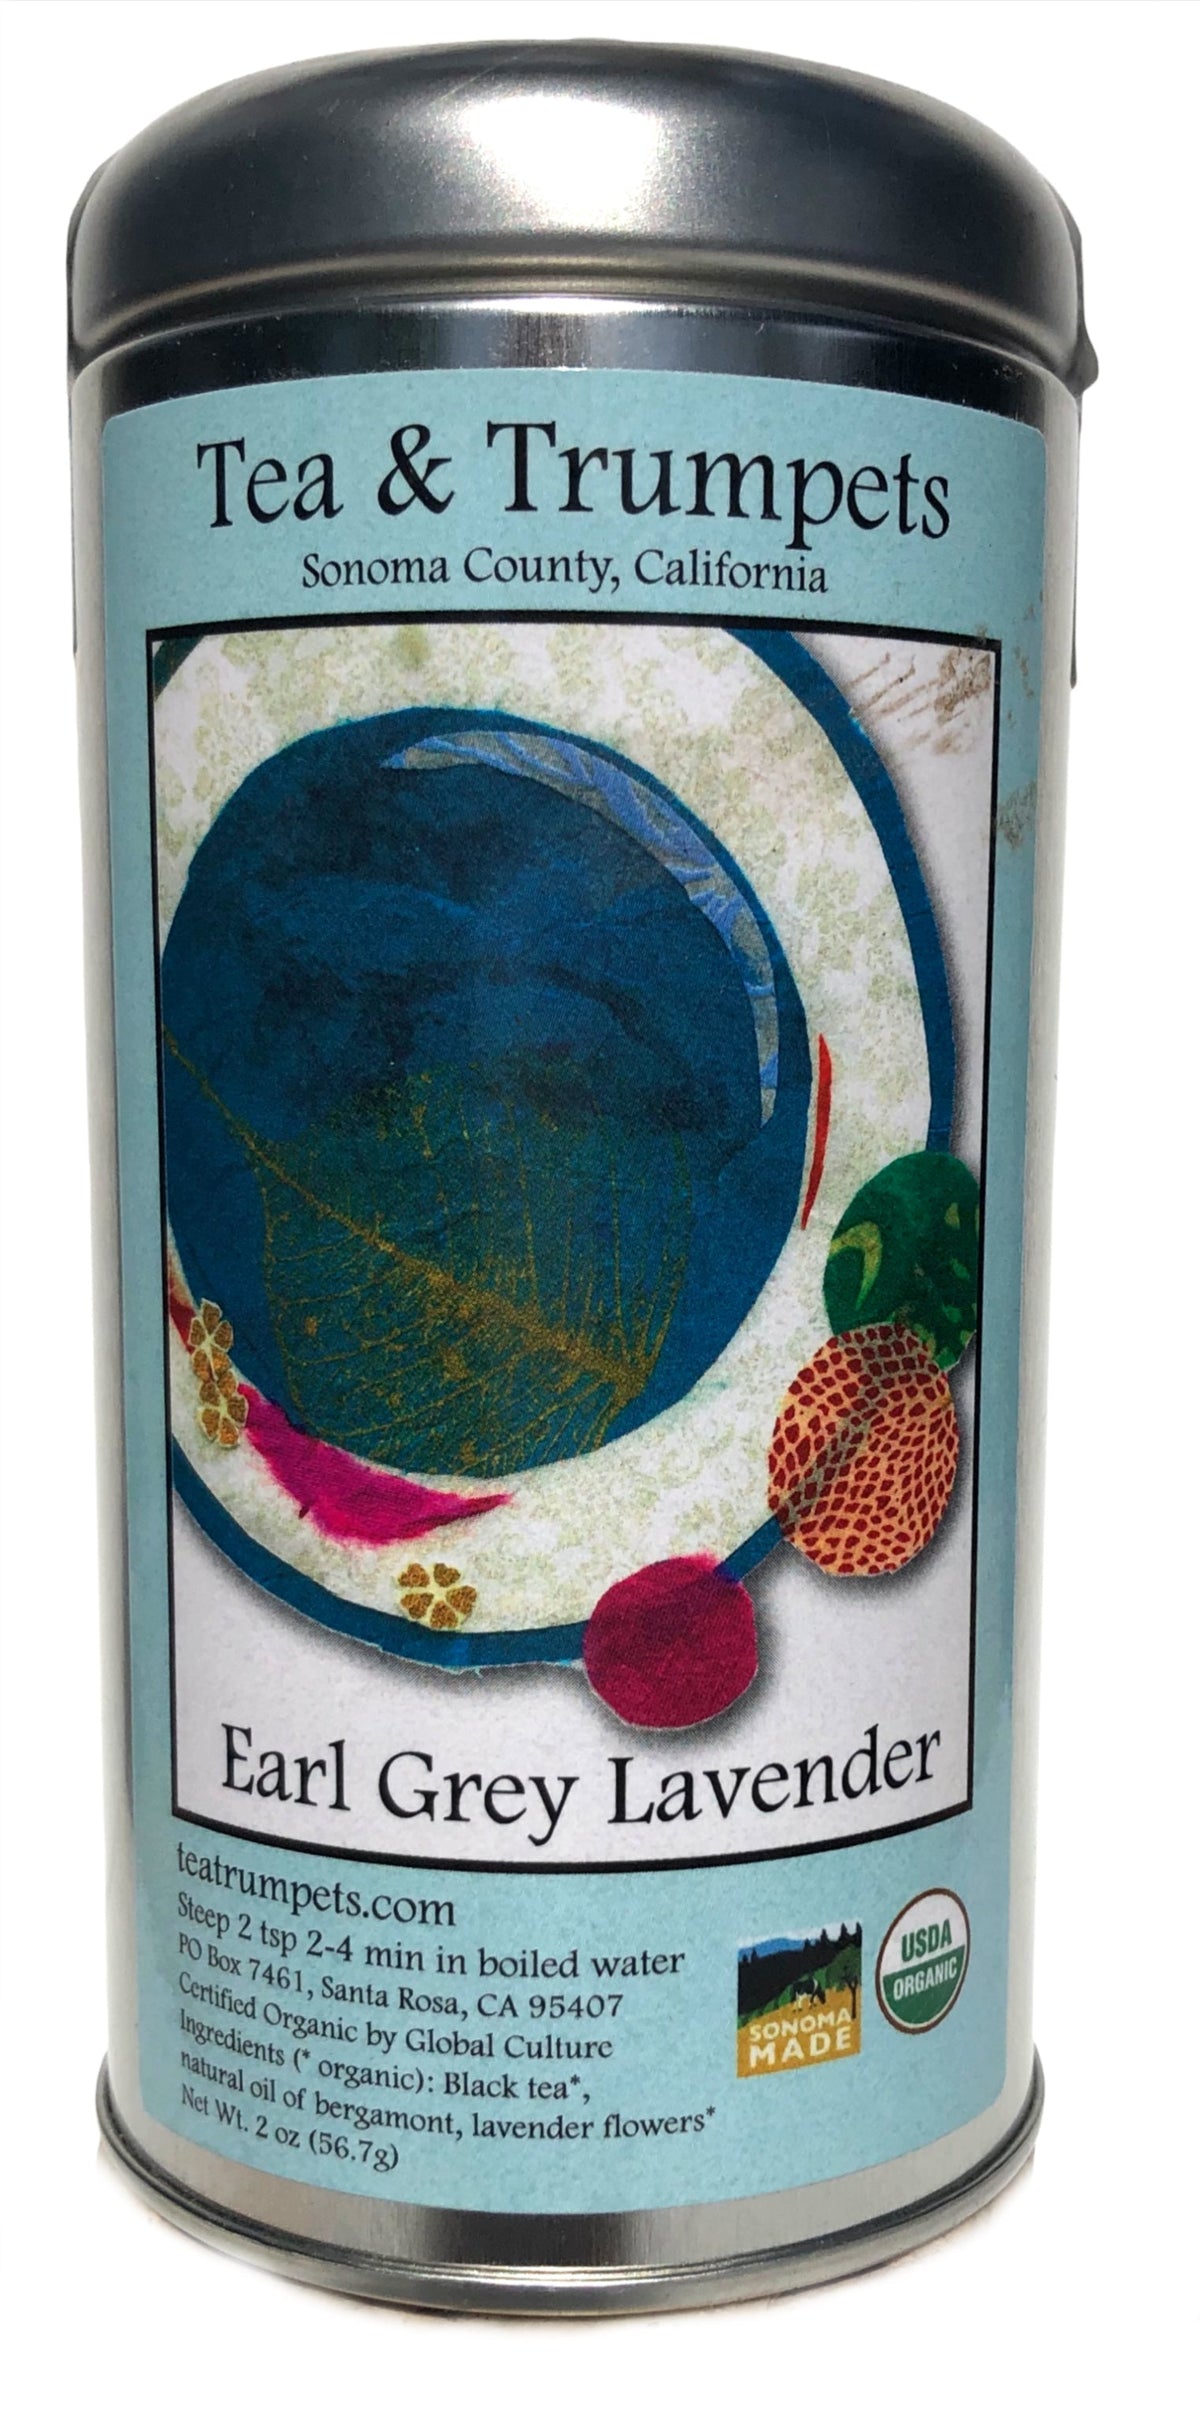 Tea & Trumpets Earl Grey Lavender Loose Tea